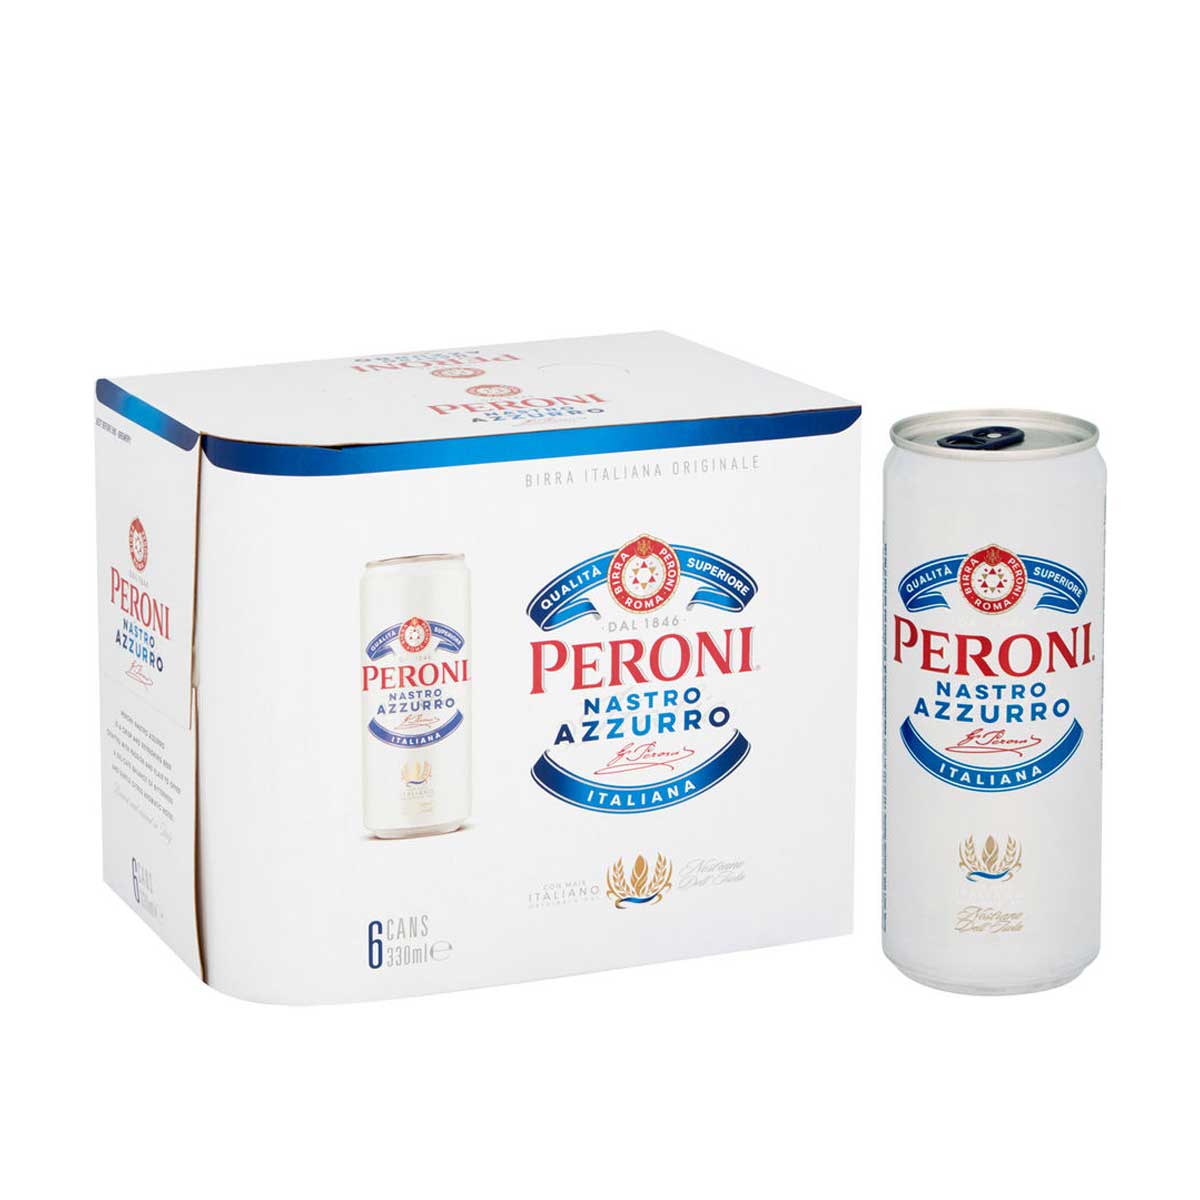 Peroni Nastro Azzurro 6 Pack Cans